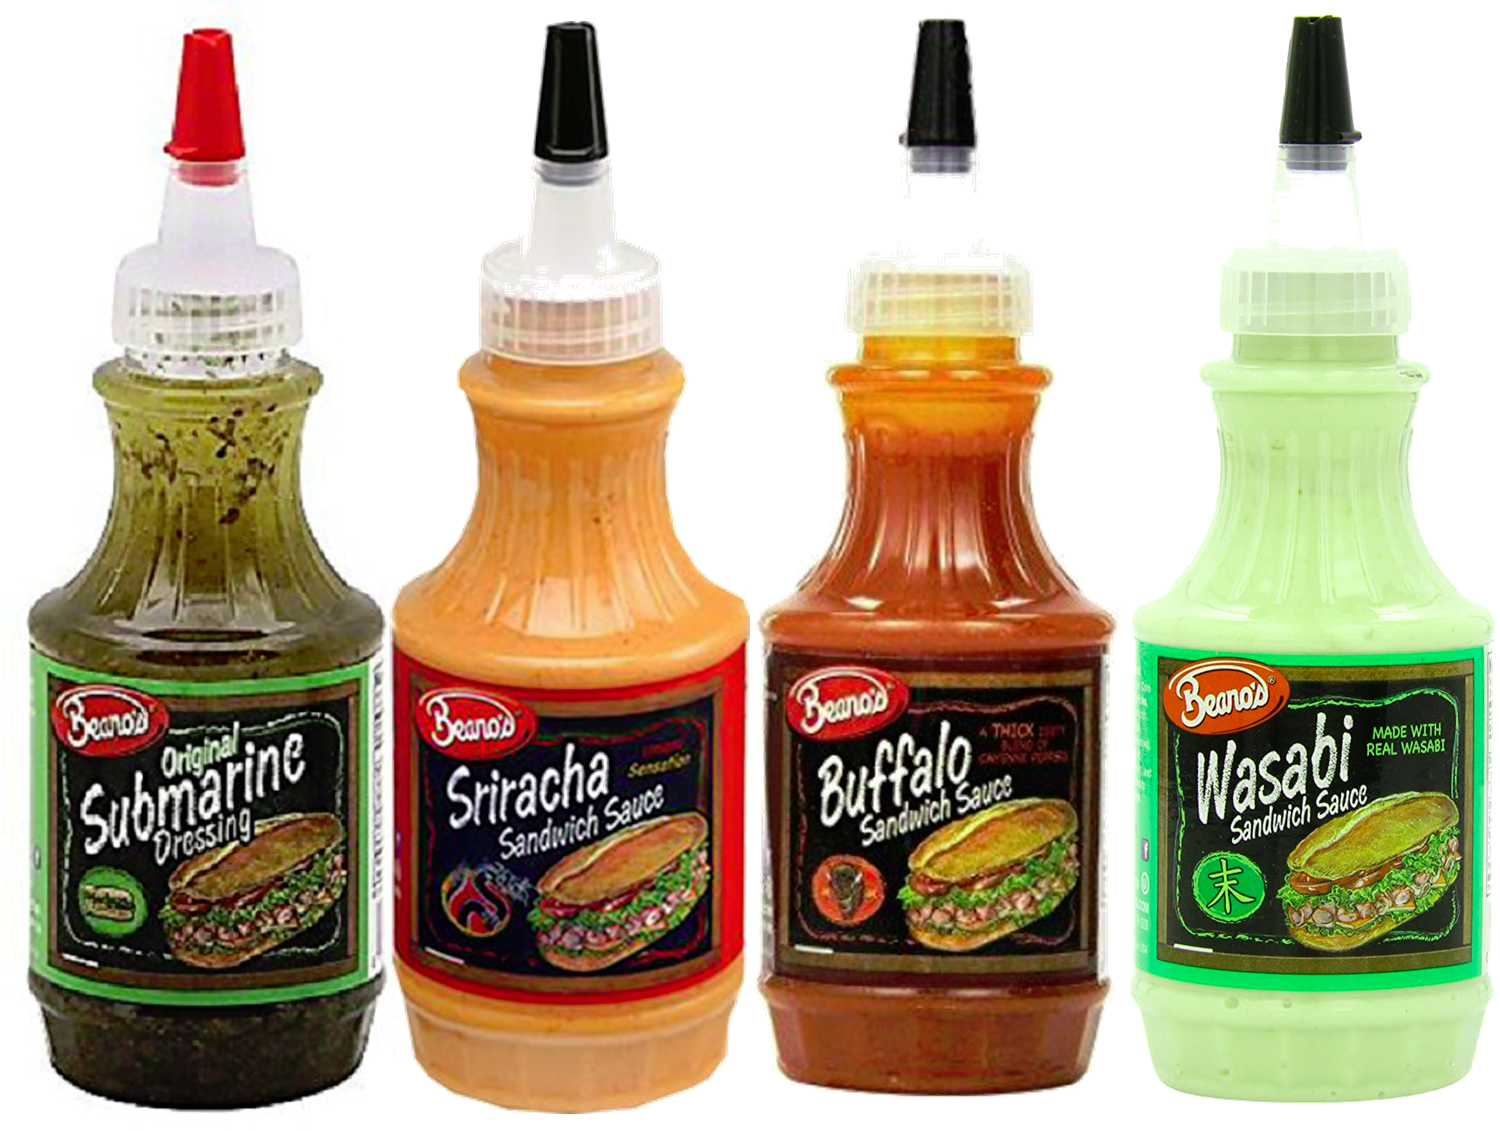 Primary image for Beano's Submarine, Sriracha, Buffalo & Wasabi Sandwich Sauce, Variety 4-Pack